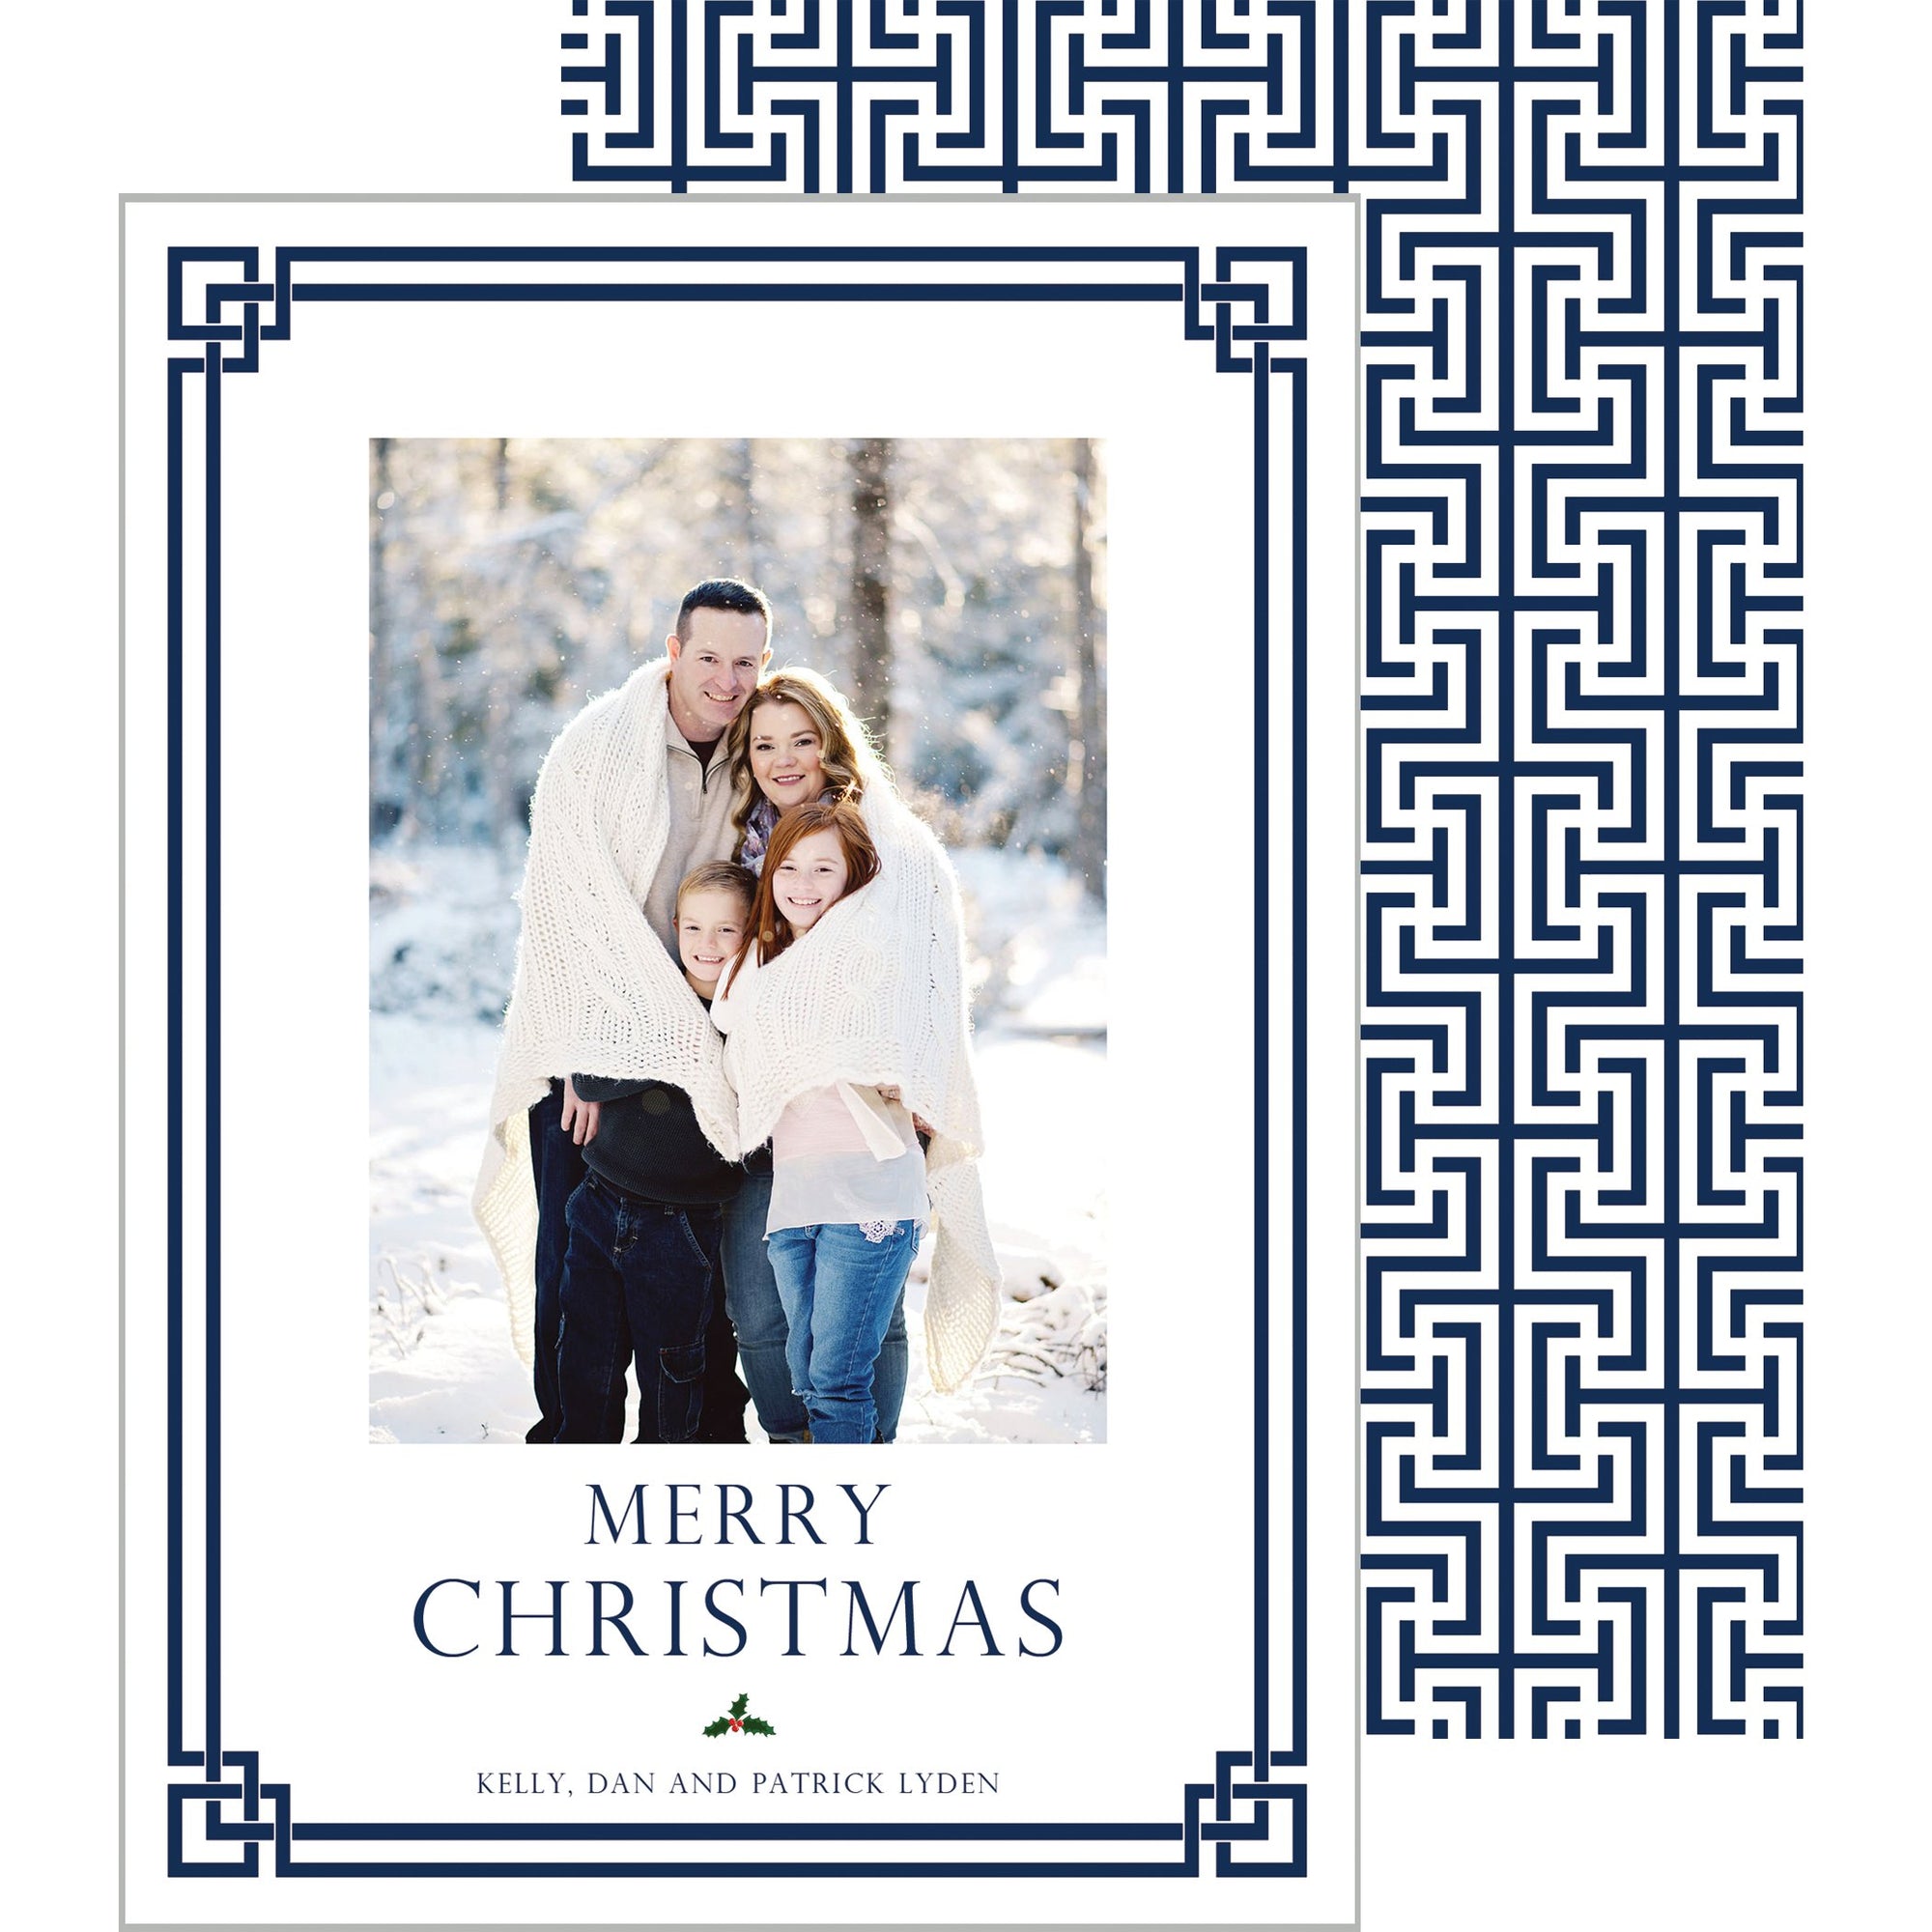 [CUSTOM] Fretwork Holiday Photo Card Wholesale - Navy Blue